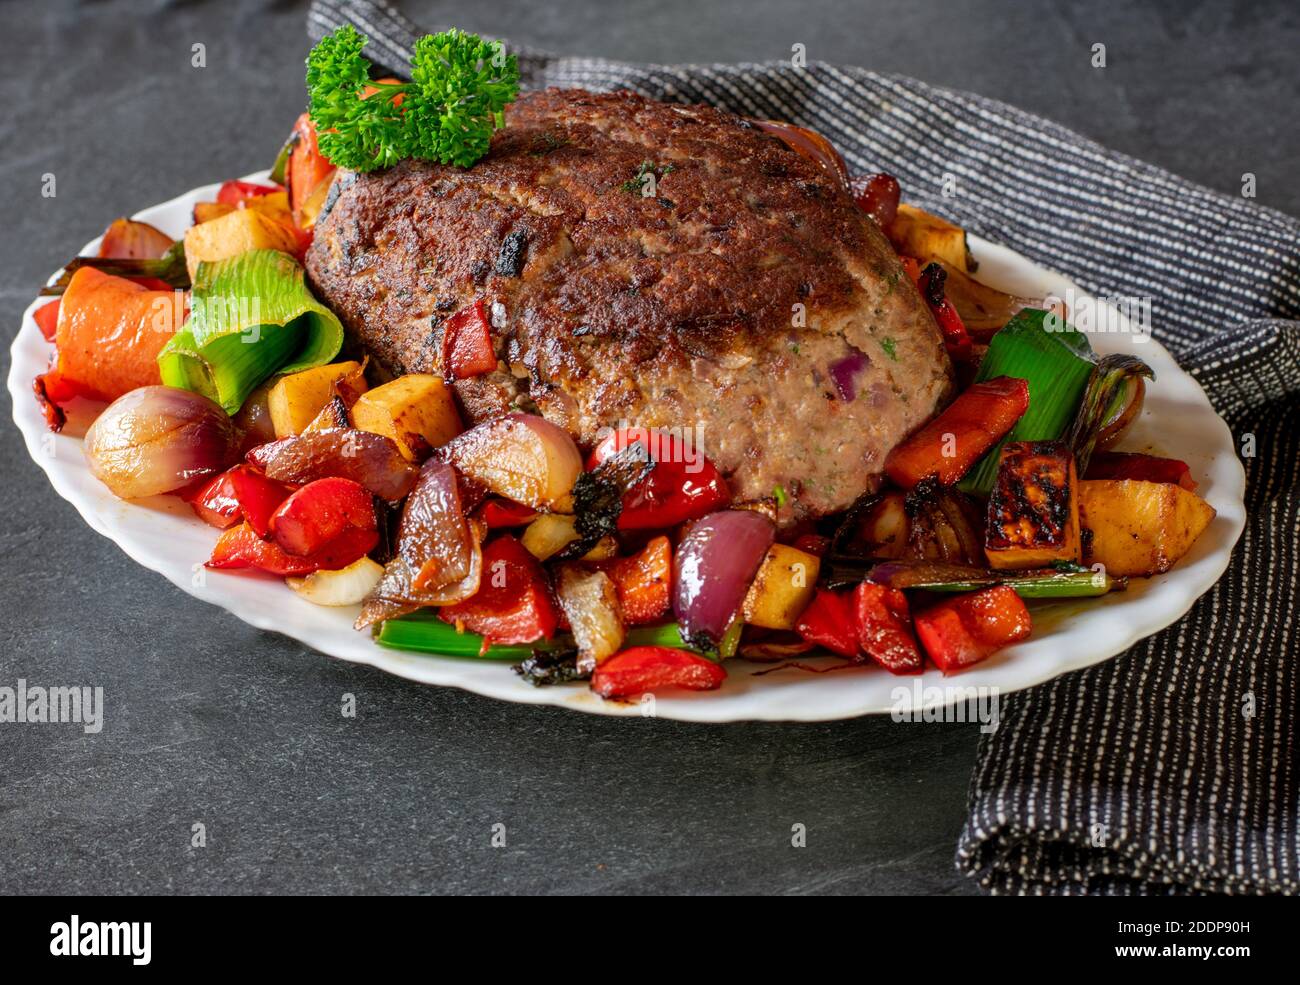 Meatloaf italiano con verdure arrostite Foto Stock